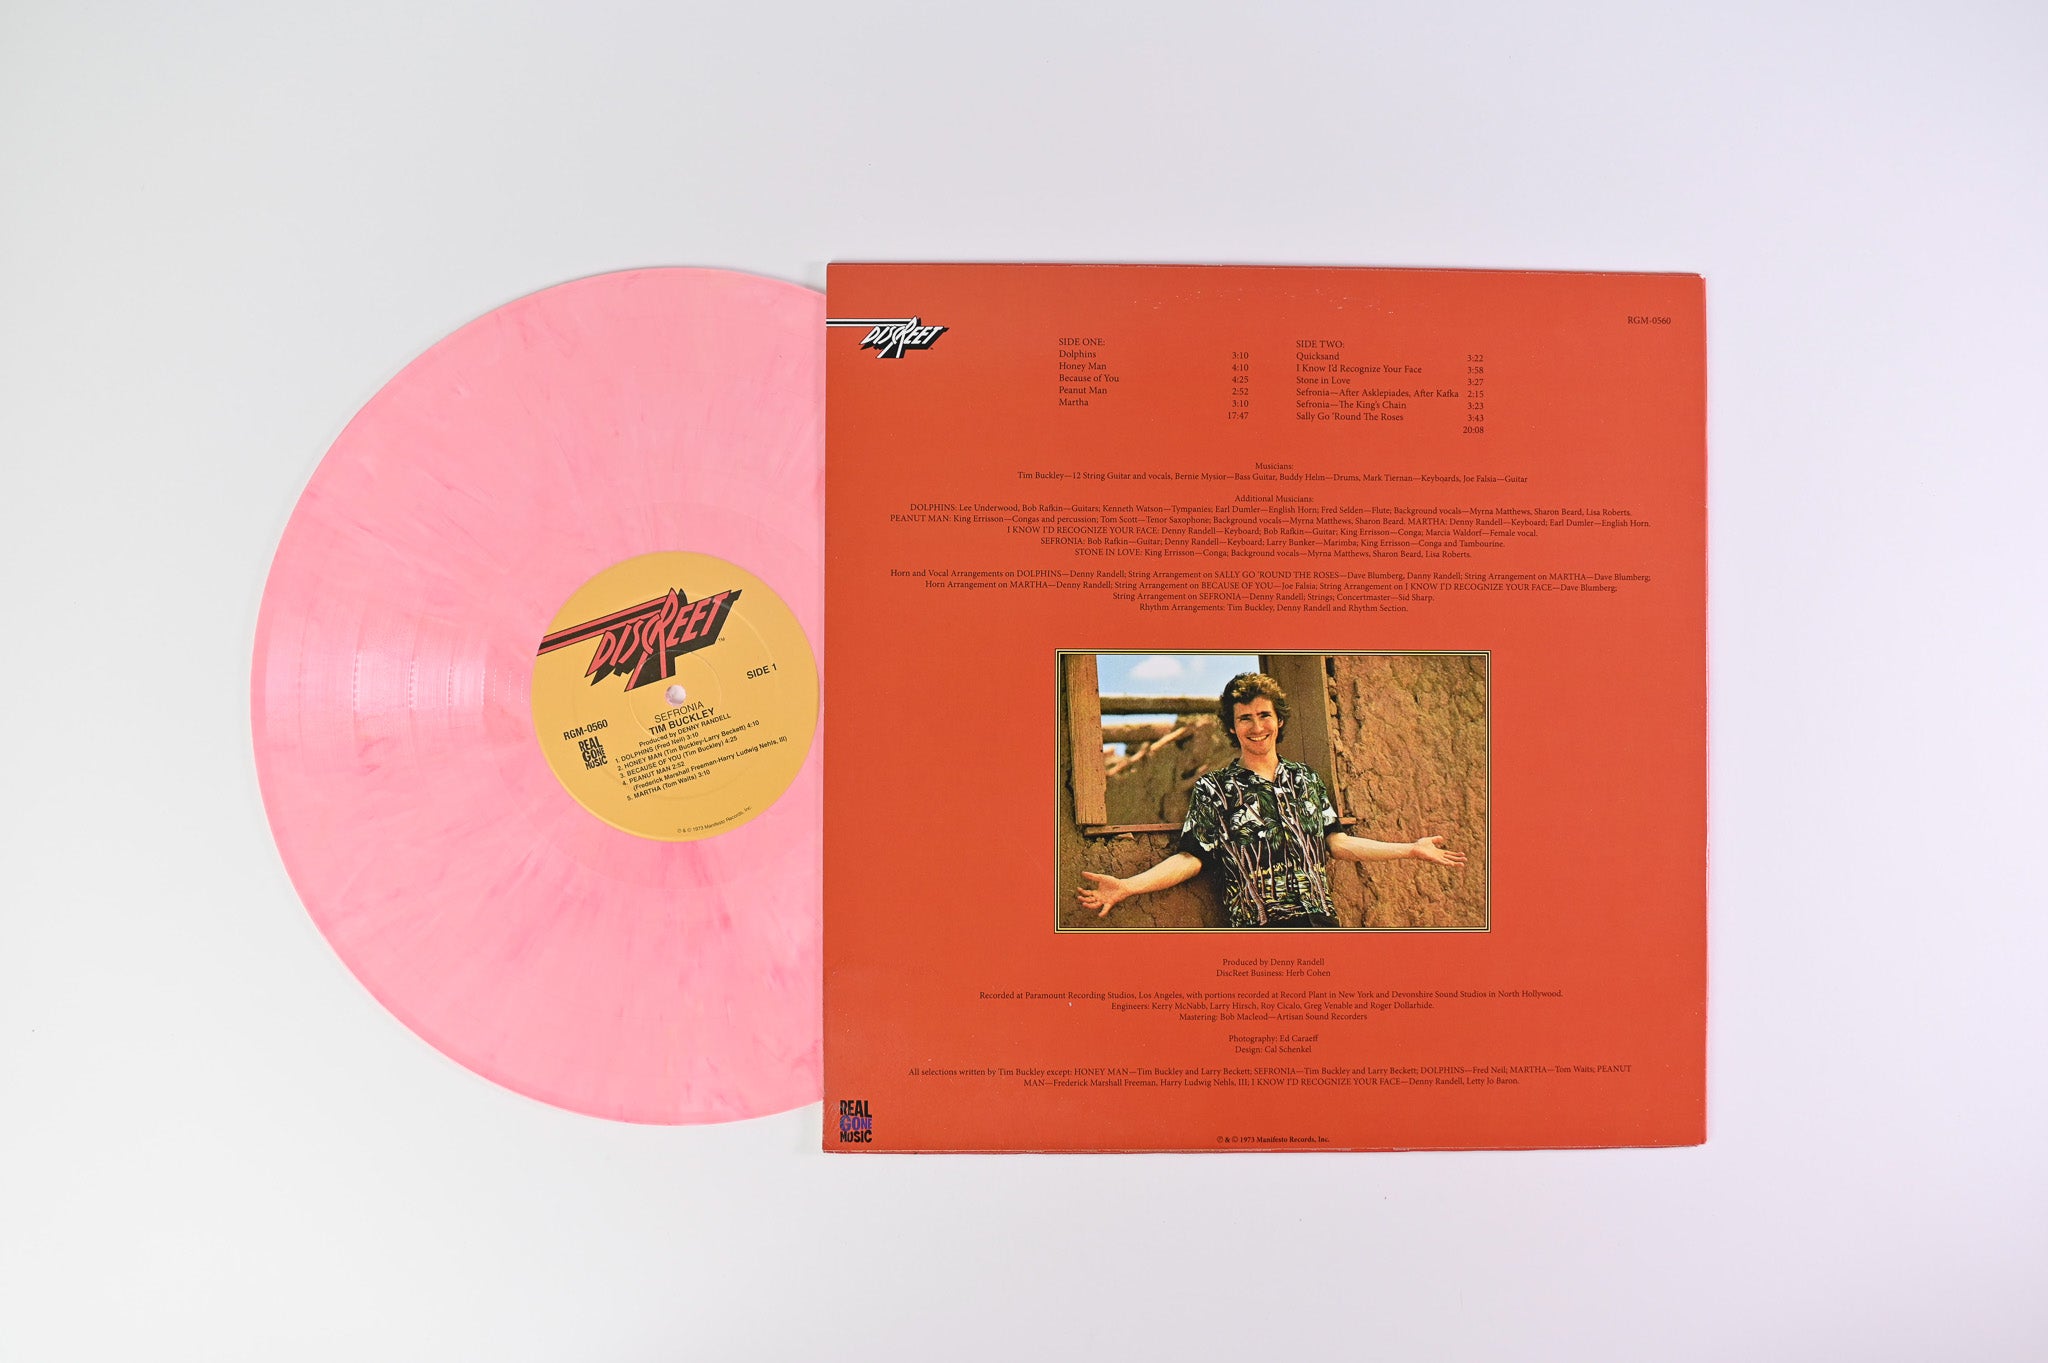 Tim Buckley - Sefronia on Discreet Ltd Salmon Pink Reissue